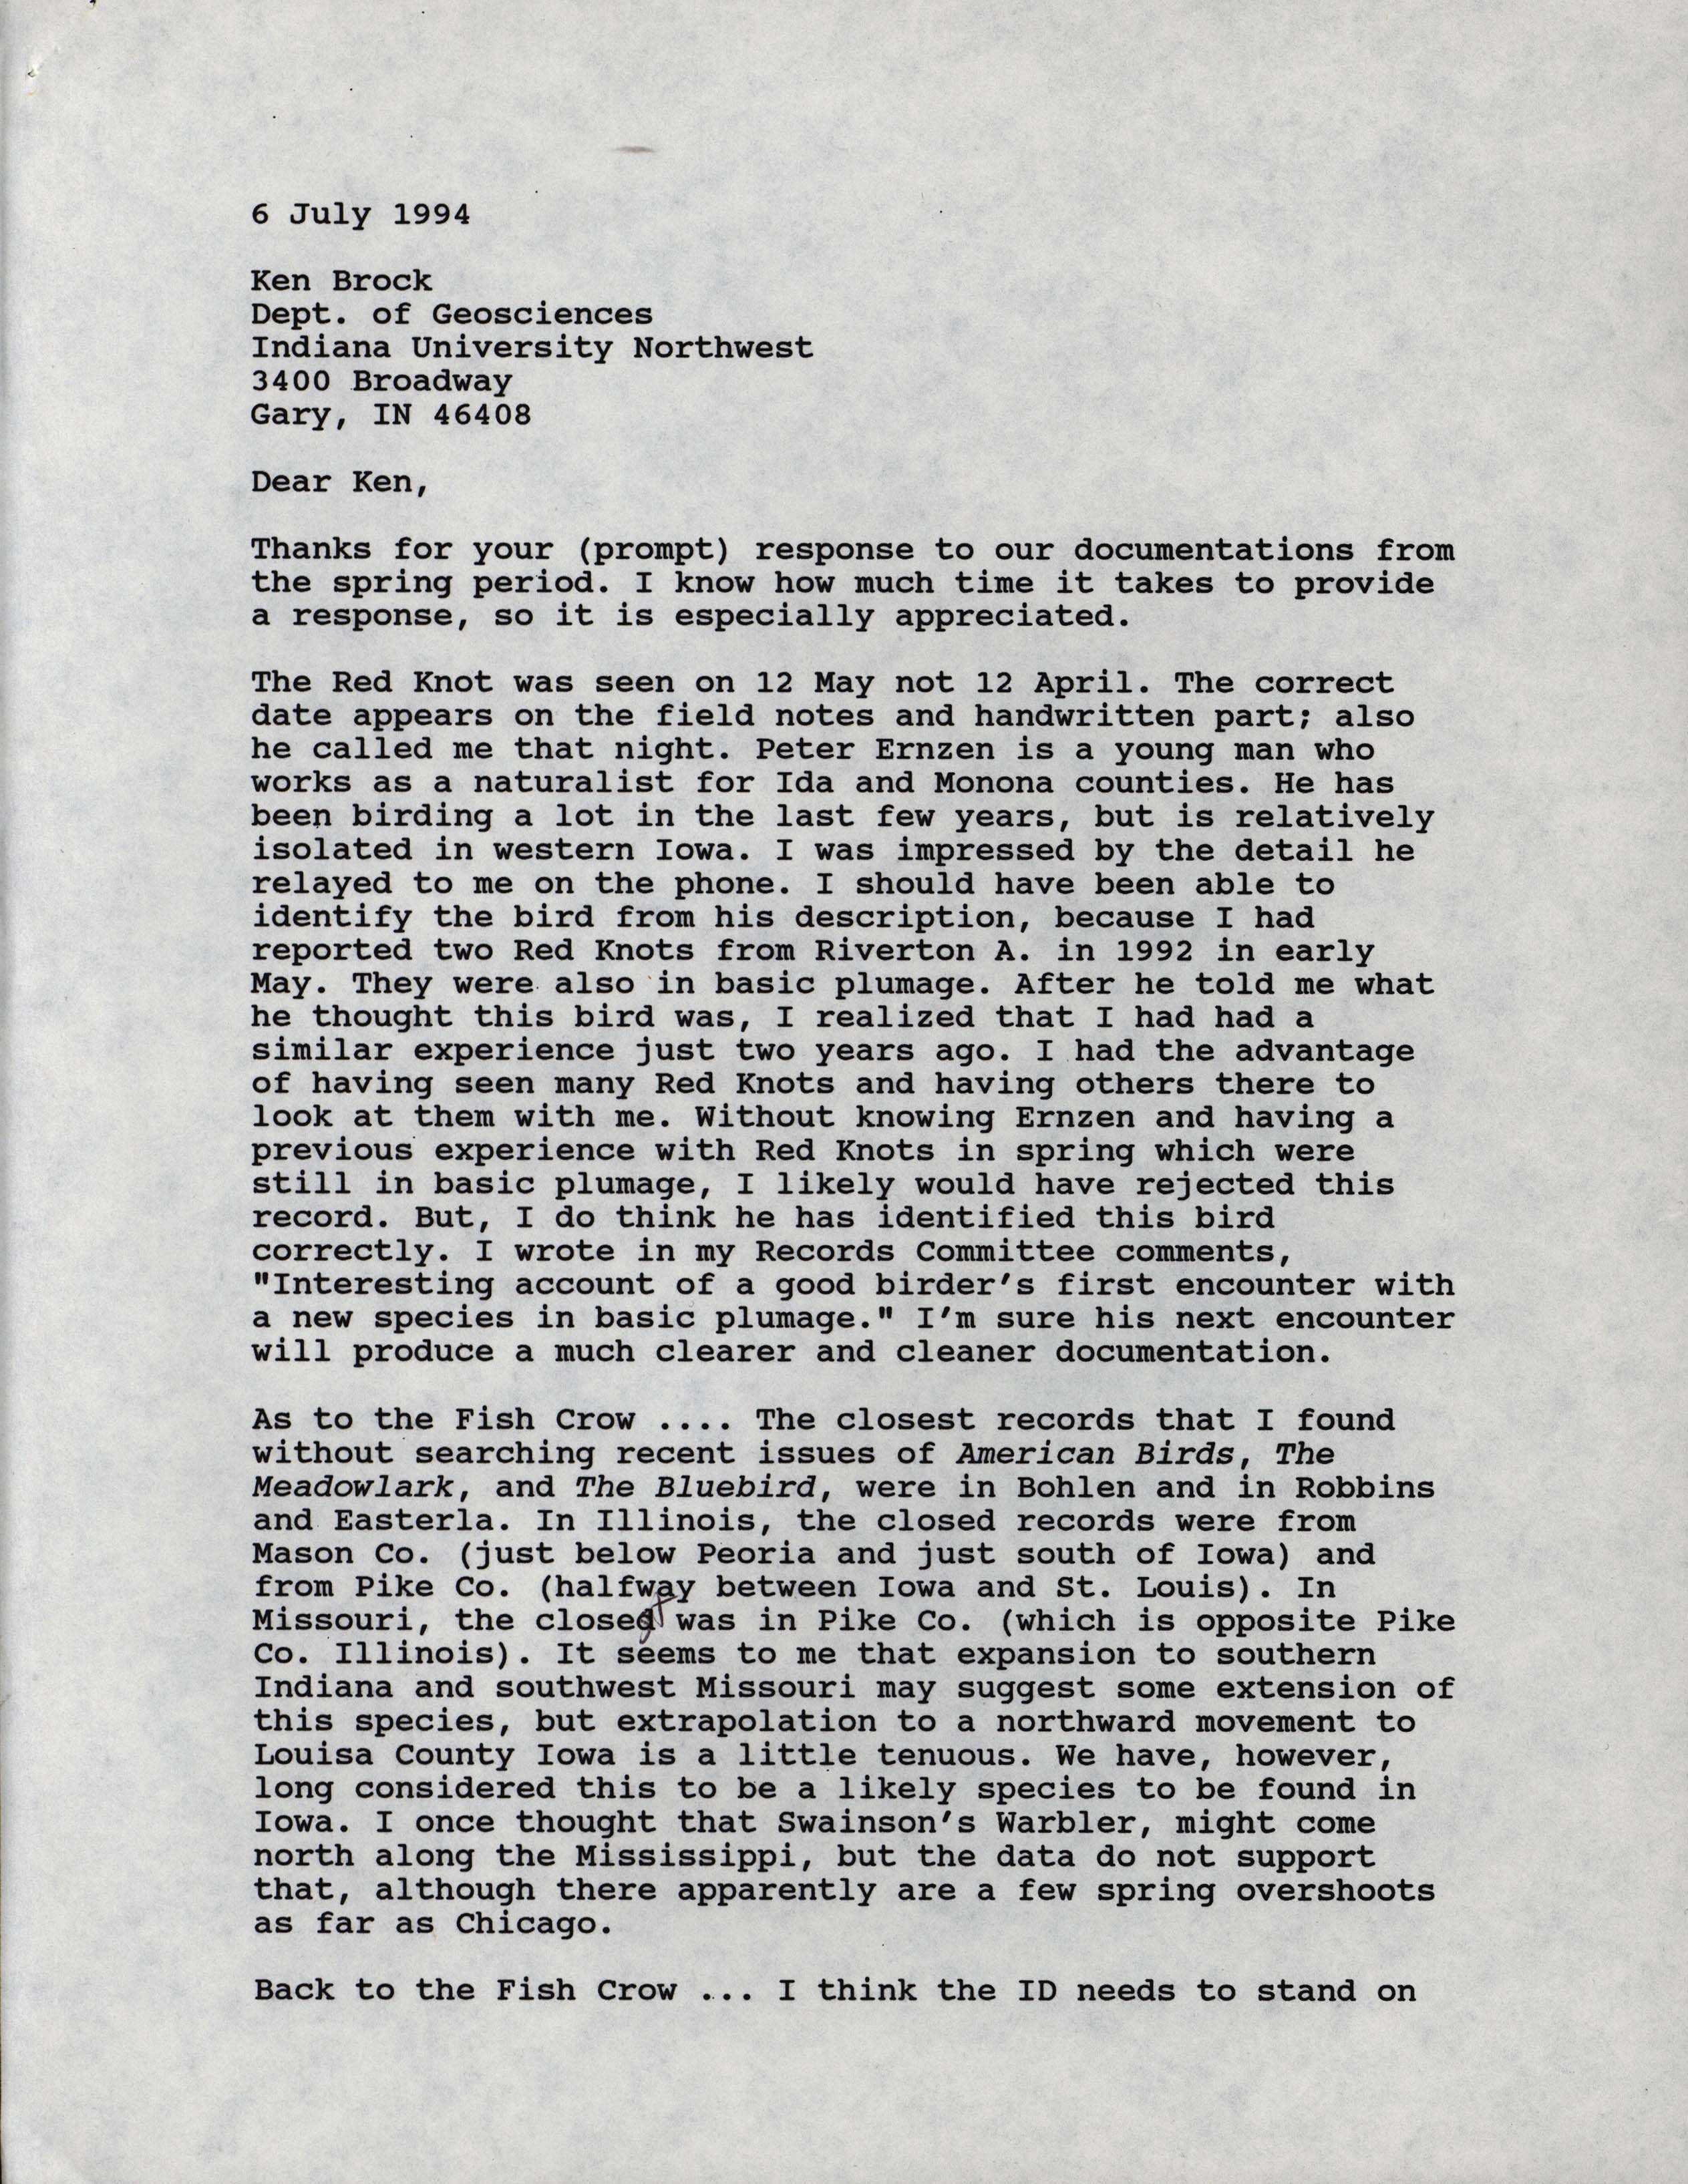 Kenneth Brock letter to Thomas Kent regarding Iowa records, July 6, 1994